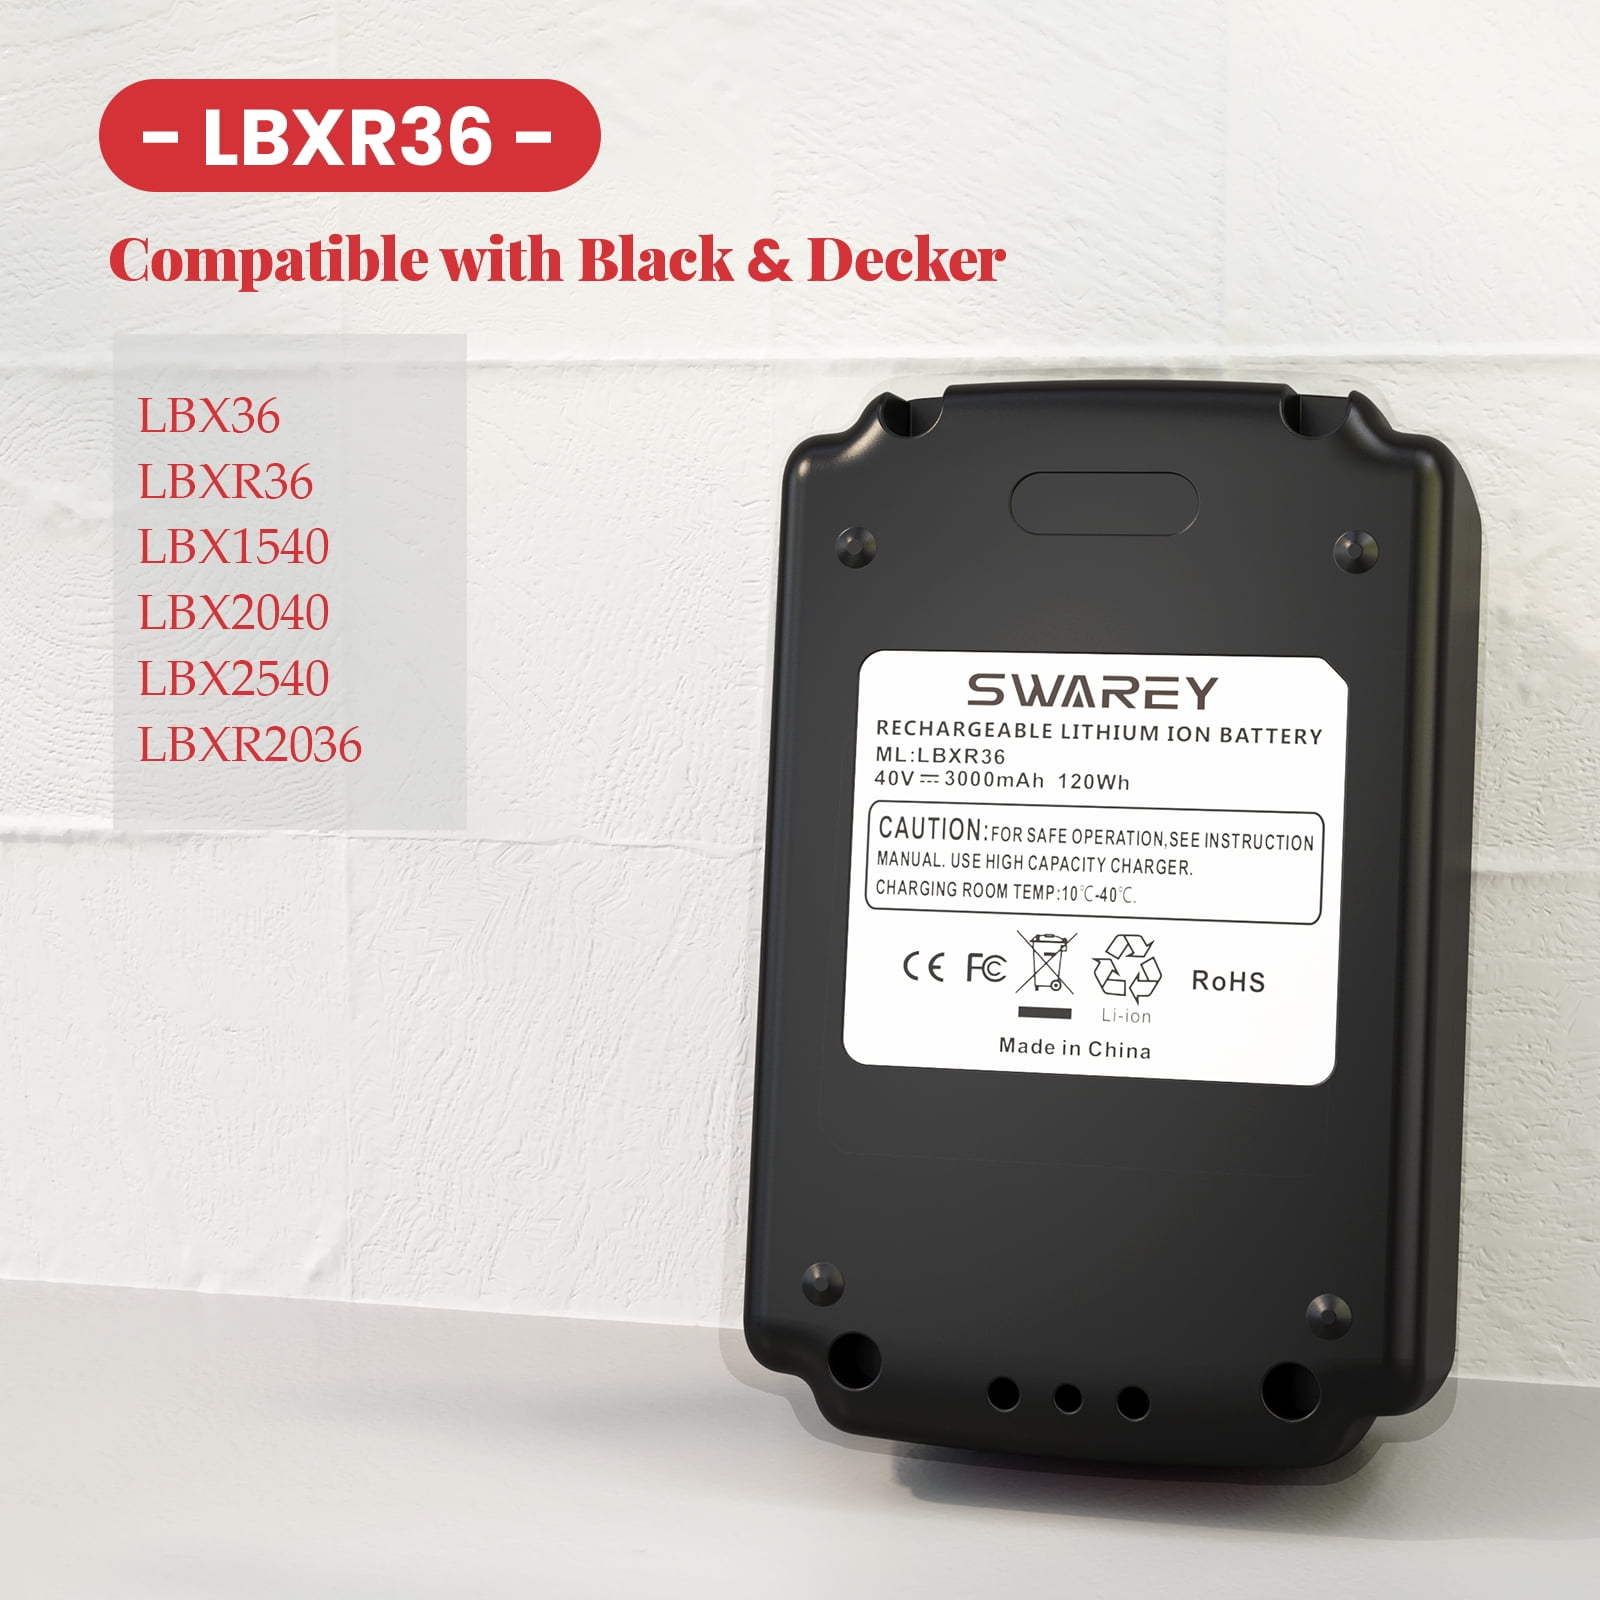 AYTXTG 3000mAh Lbx2040 Replacement Black and Decker 40V Max Lithium Battery Lbx2040 LBXR36 LBXR2036 LST540 LCS1240 LBX1540 Lst136w 40 Volt Black and D